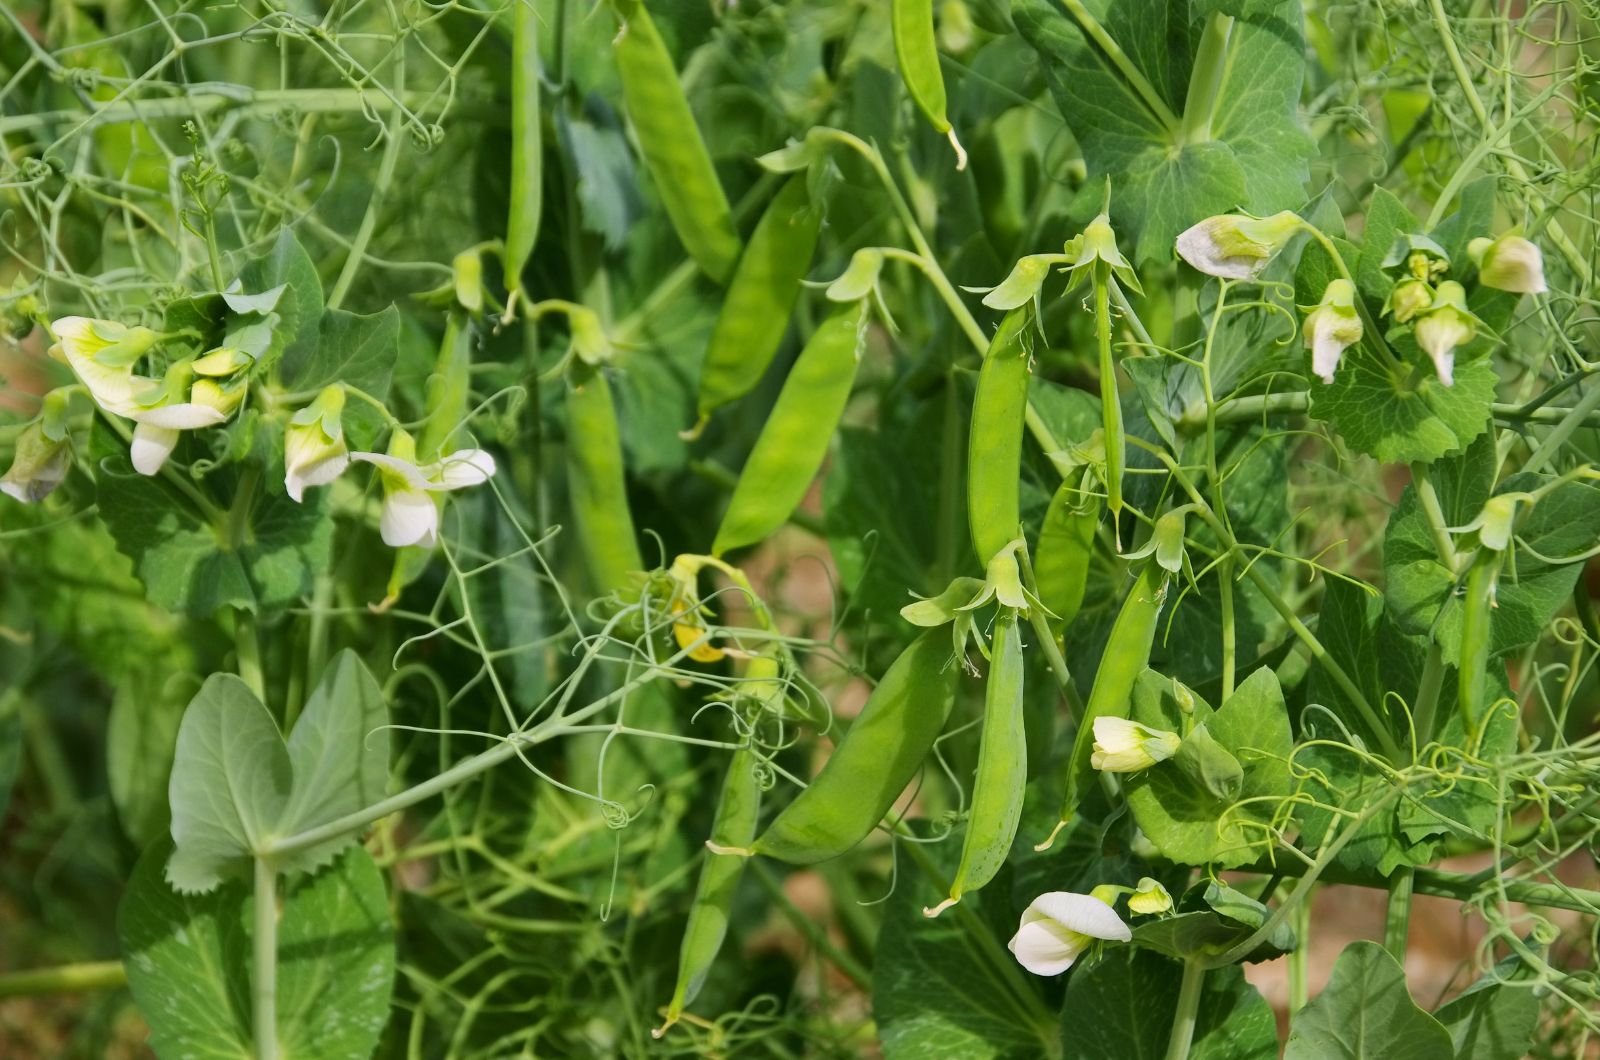 peas plant in the garden